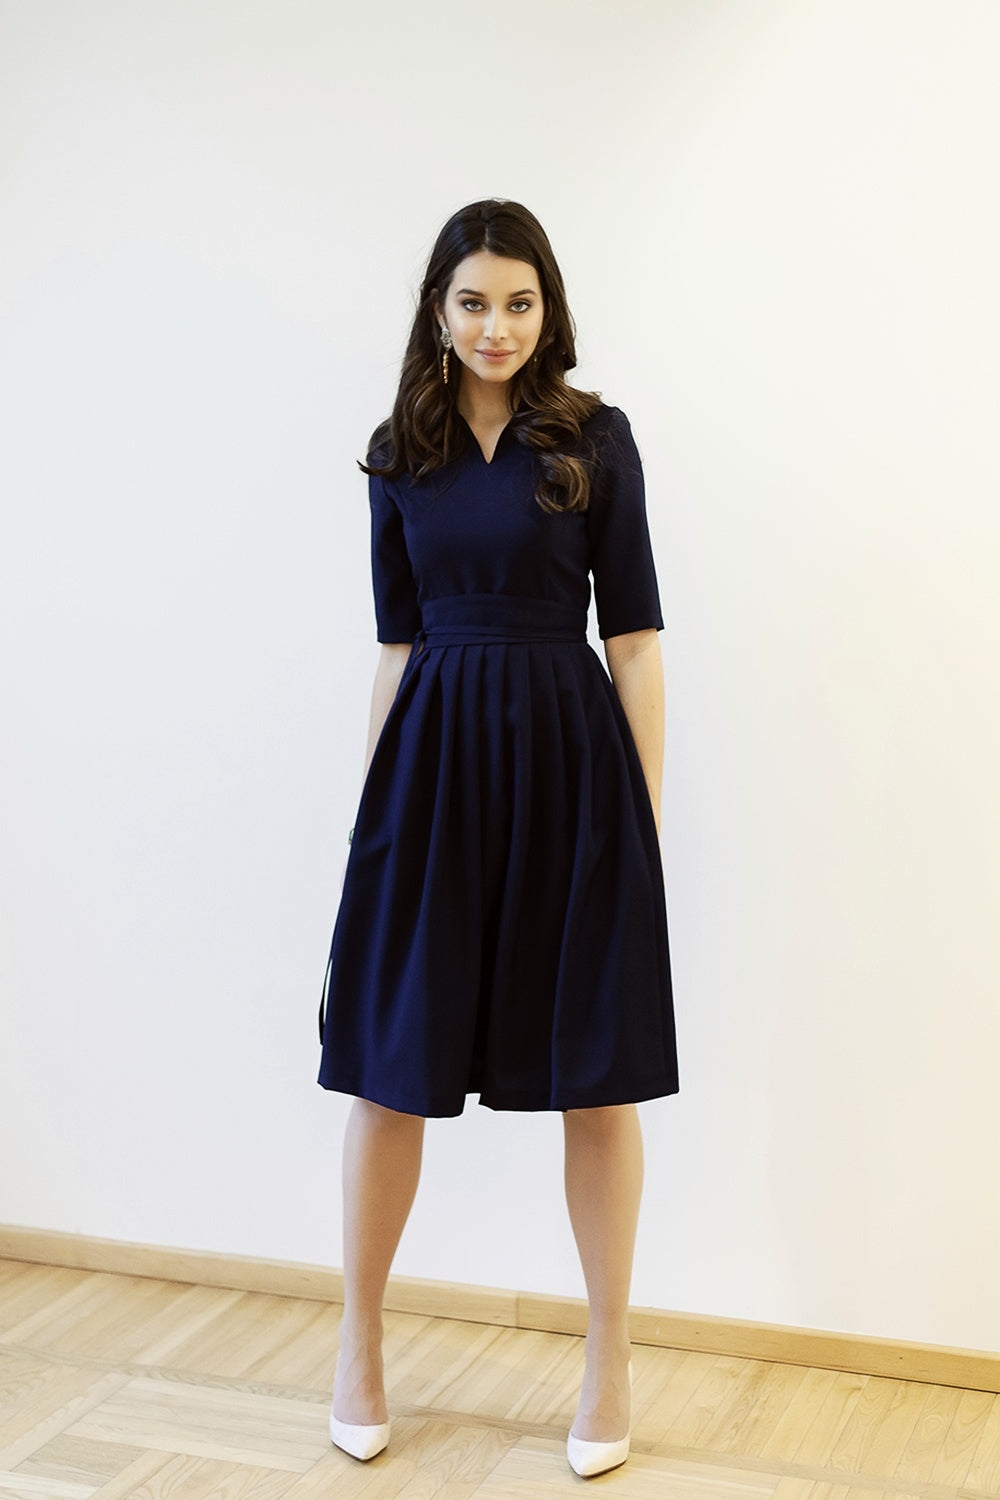 Dark blue dress with short sleeves